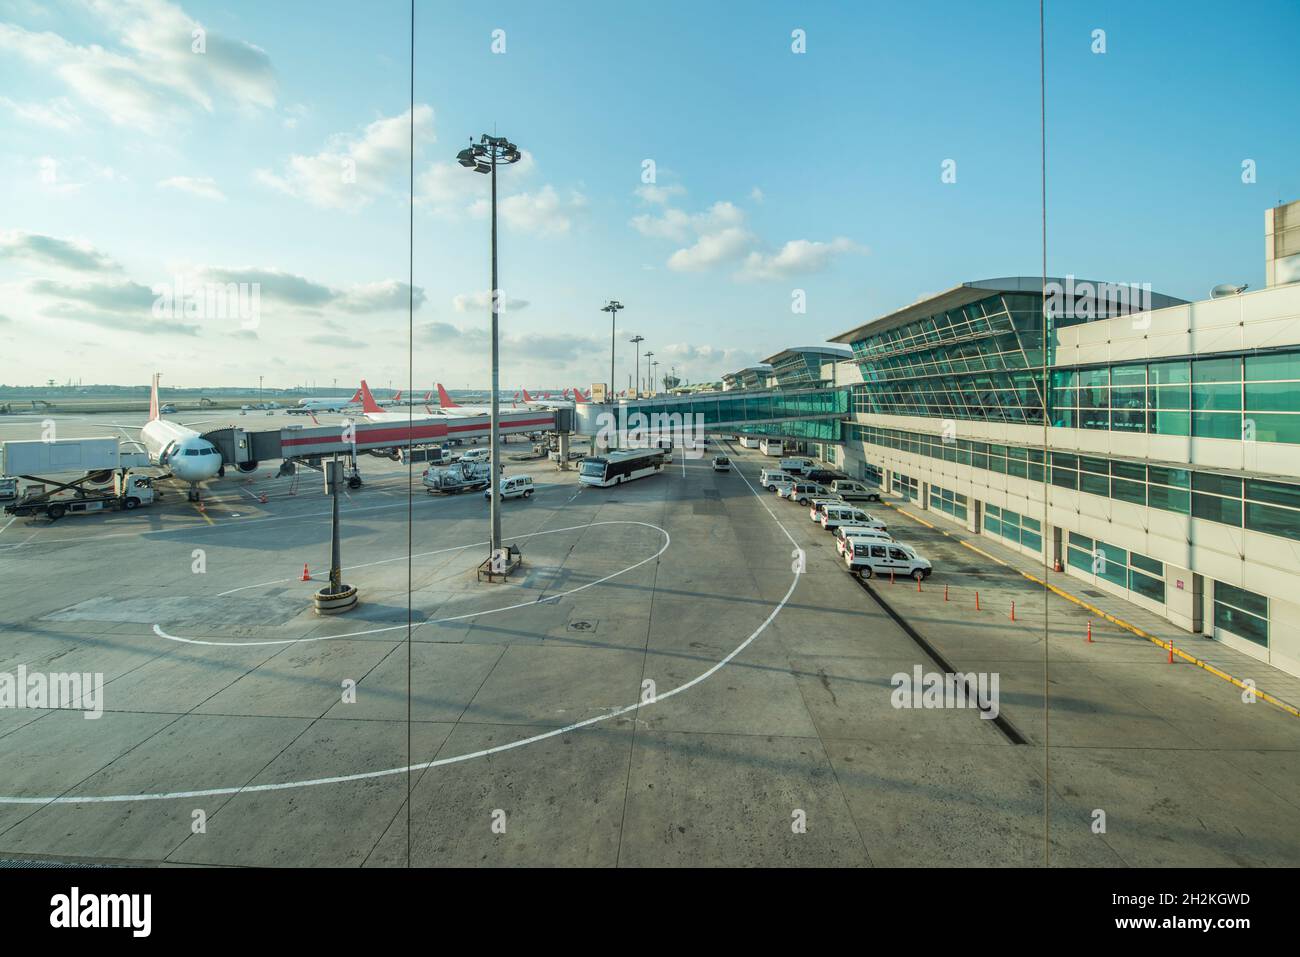 Passenger airport terminal through window Stock Photo